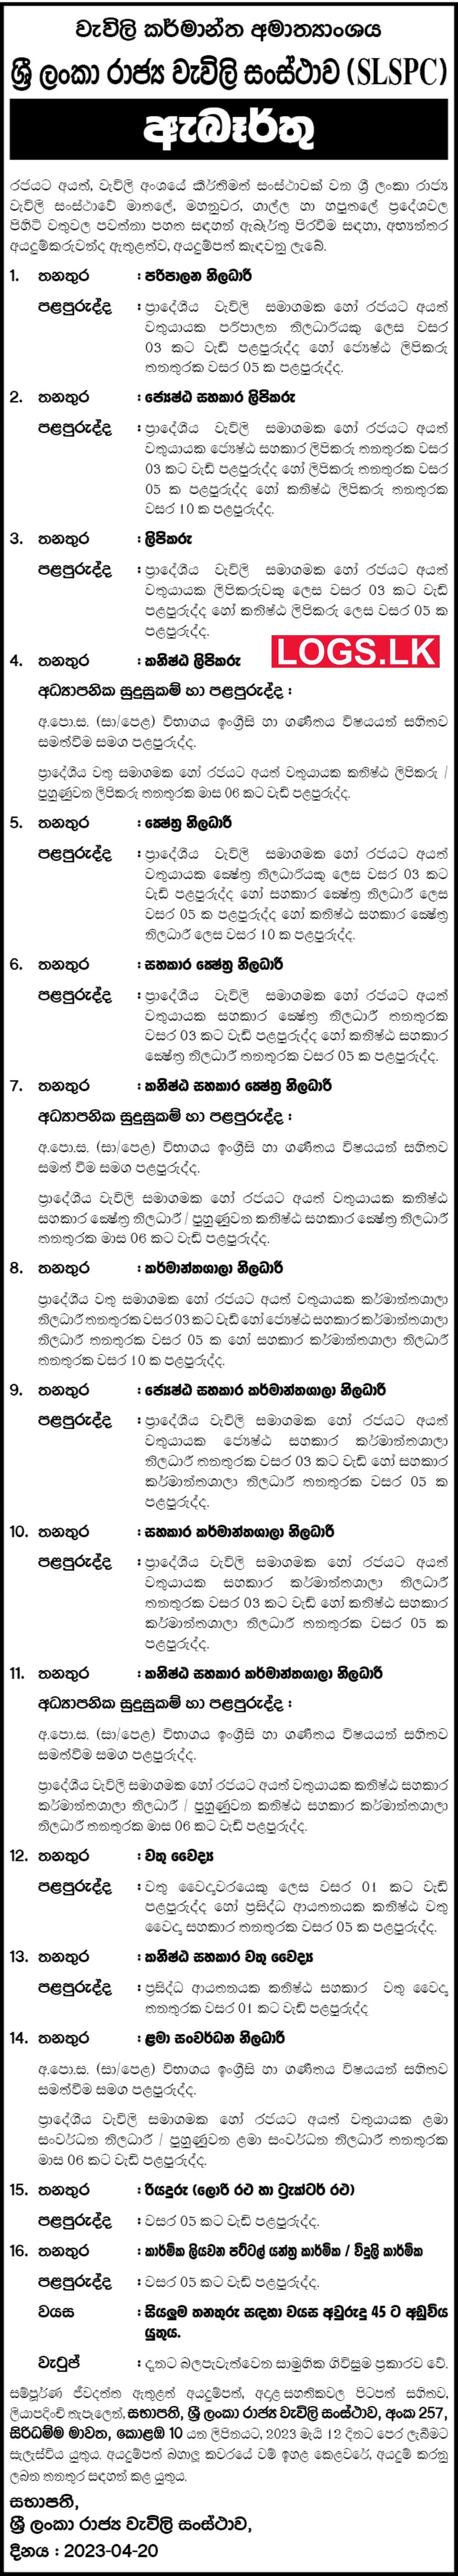 Sri Lanka State Plantations Corporation Vacancies 2023 Application Form, Details Download